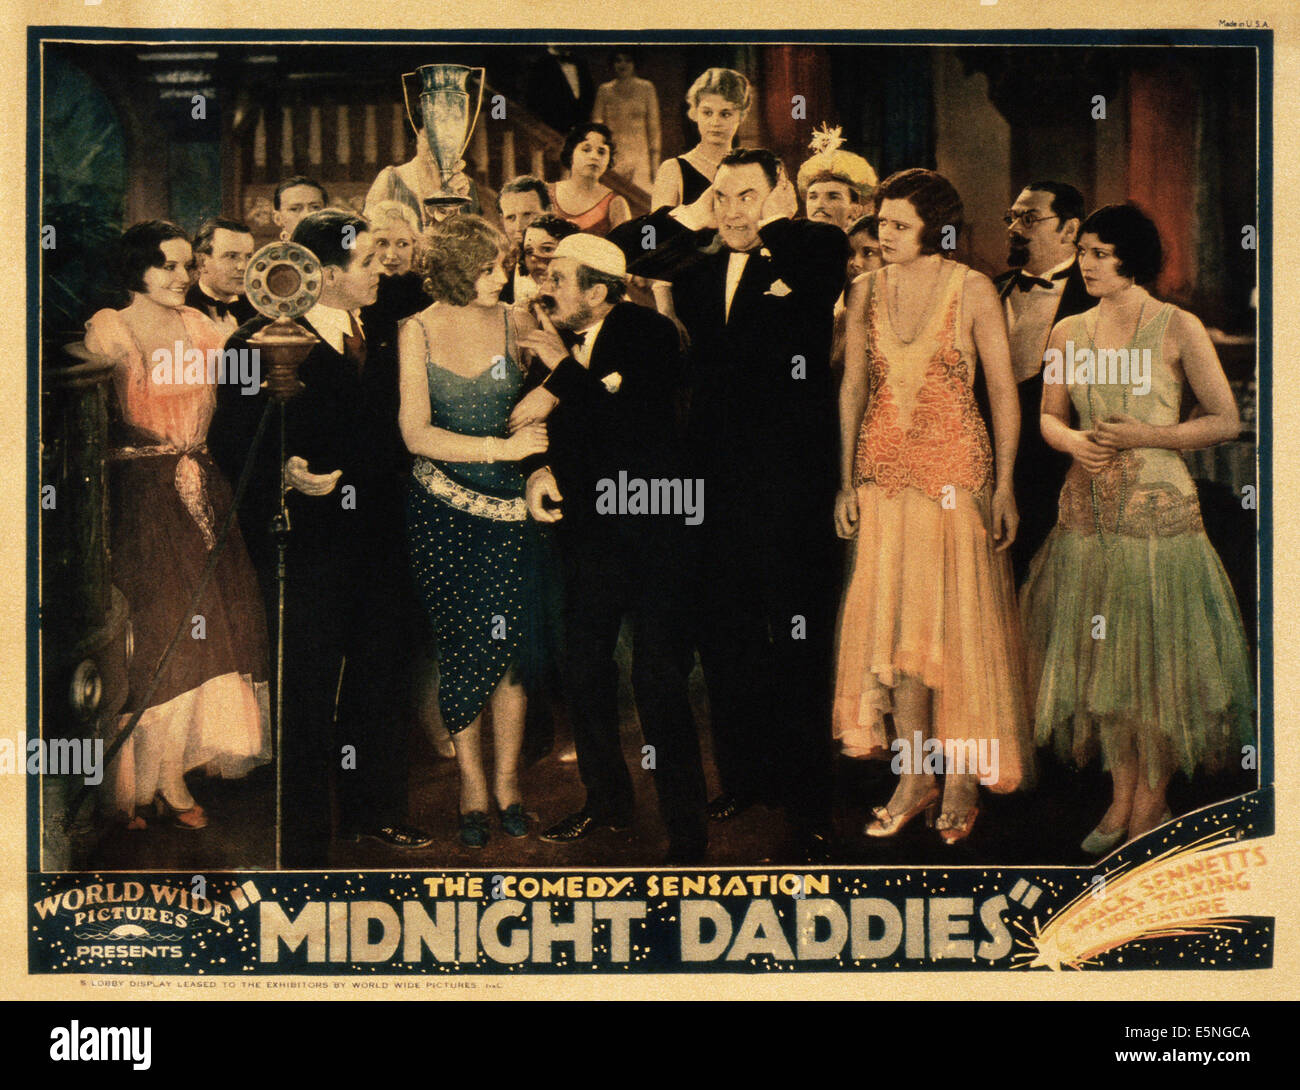 MIDNIGHT DADDIES, US lobbycard, 1930 Stock Photo